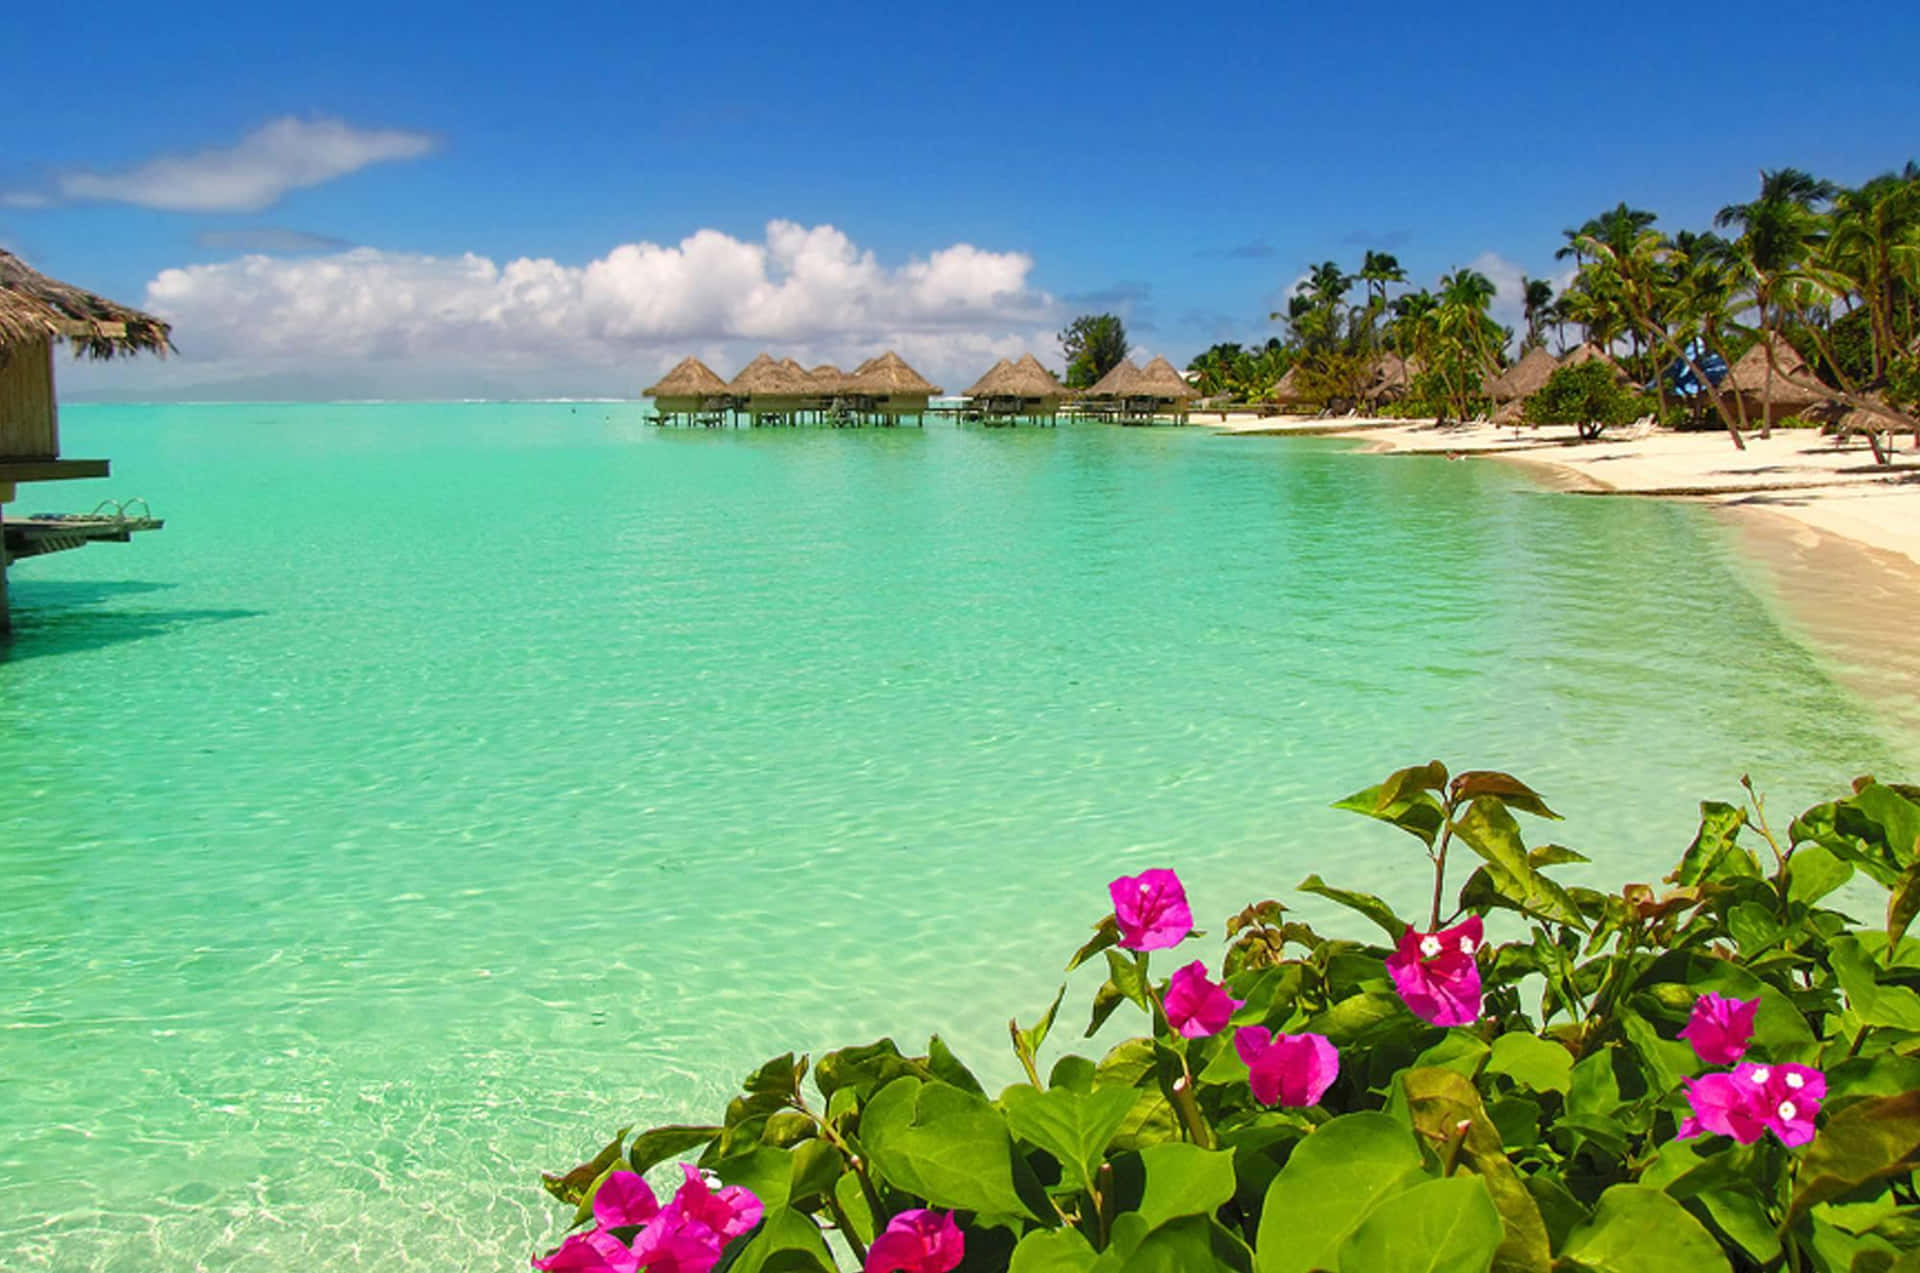 "Soak in the beauty of Bora Bora"